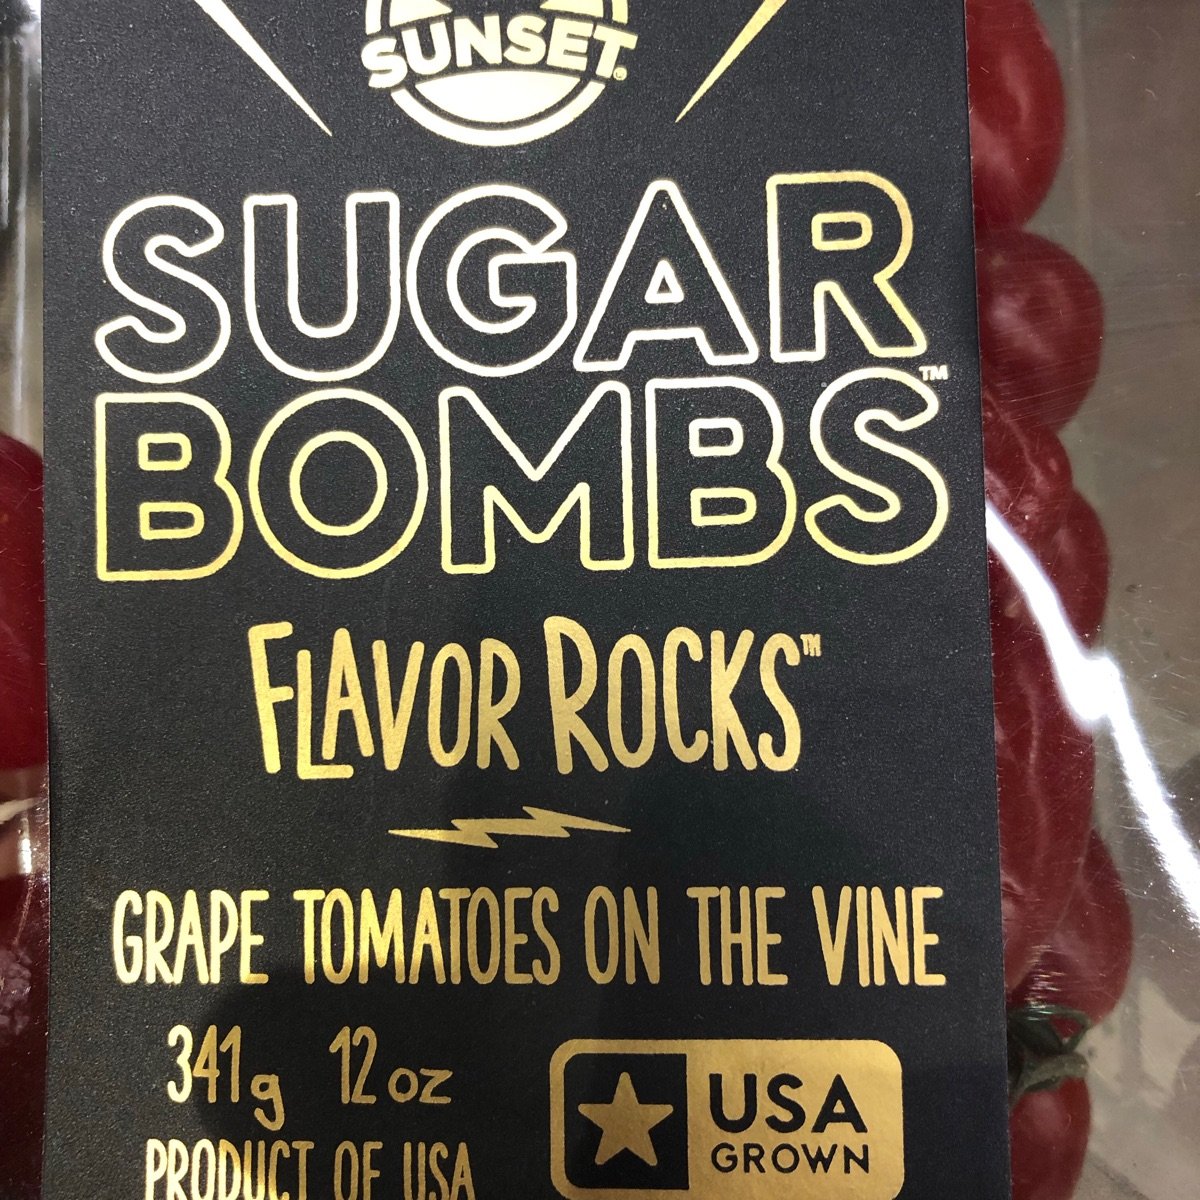 Sunset Sugar Bomb Flavor Rocks Grape Tomatoes On The Vine Reviews